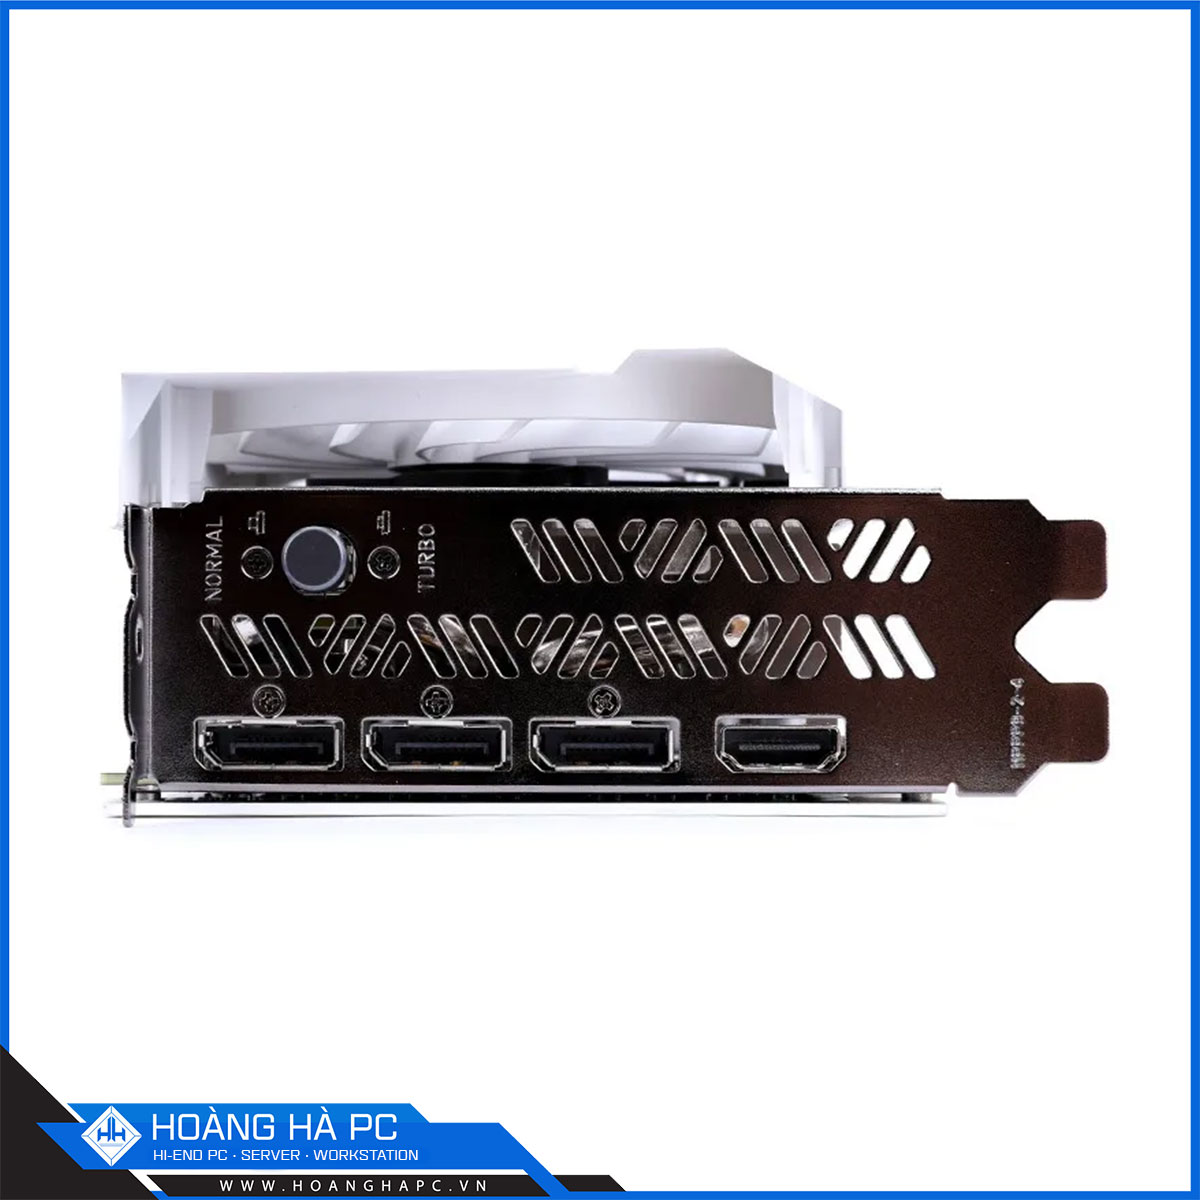 VGA Colorful iGame GeForce RTX 3070 Ti Ultra W OC 8G-V (8GB GDDR6X, 256-bit, HDMI +DP, 2x8-pin)